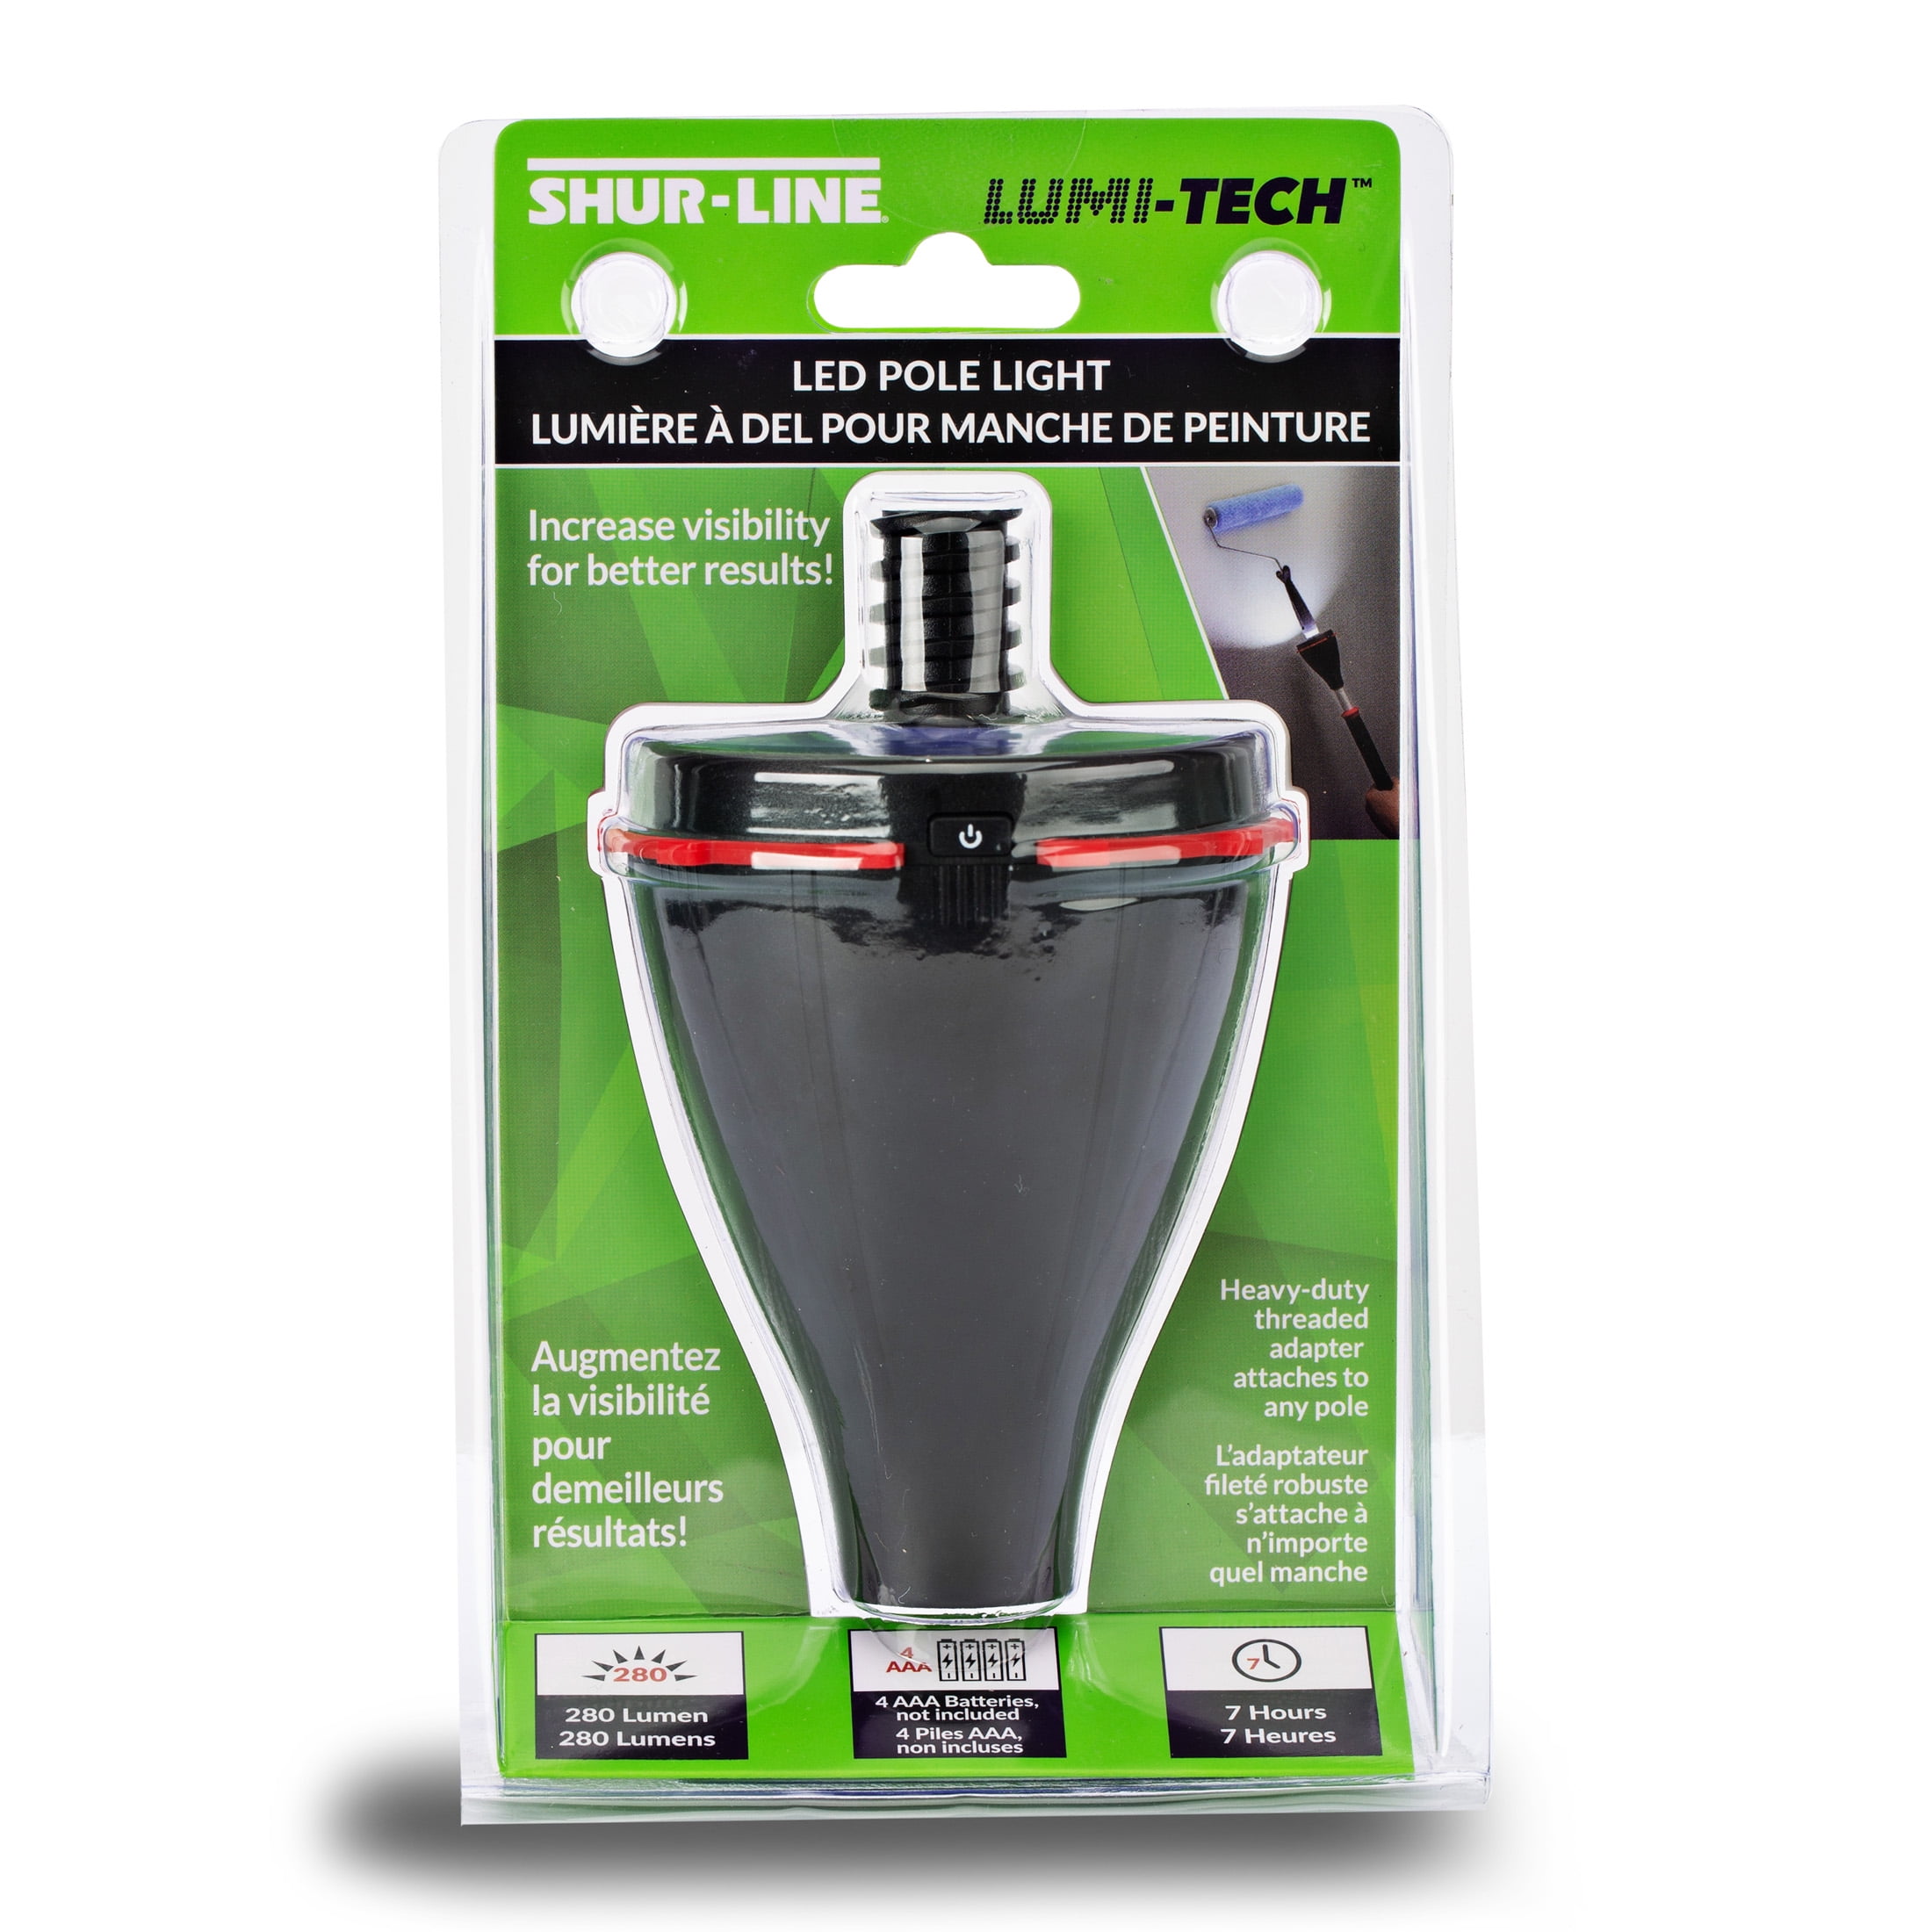 Shur-Line Lumi-Tech LED Pole Light Adapter